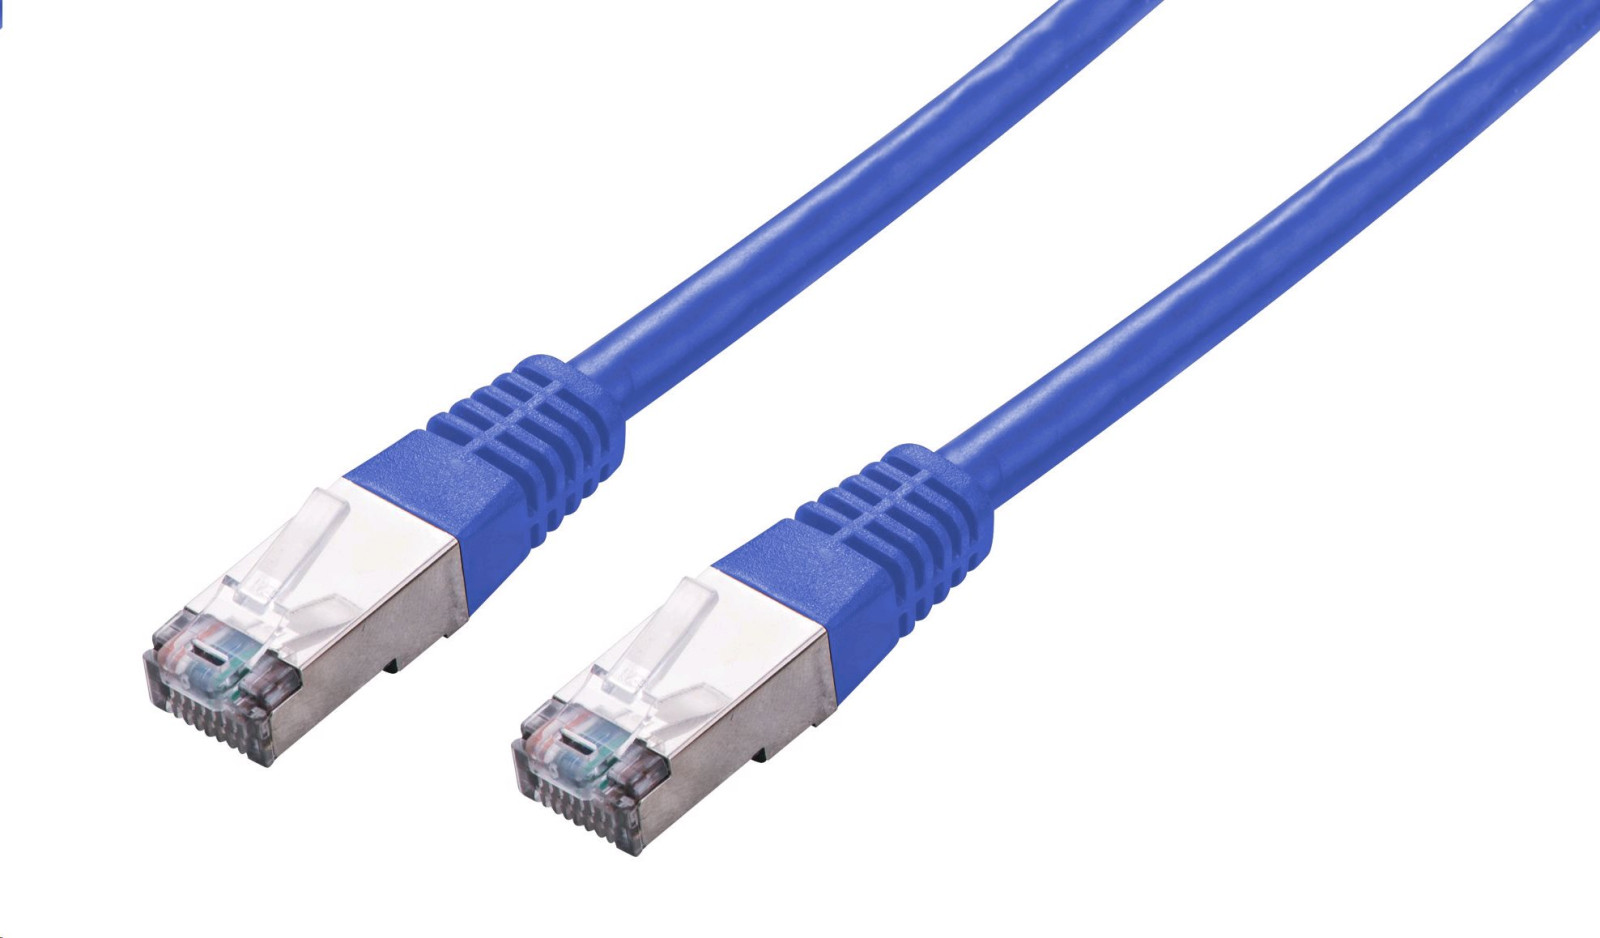 C-TECH Cablu patchcord Cat5e, FTP, albastru, 0.25m